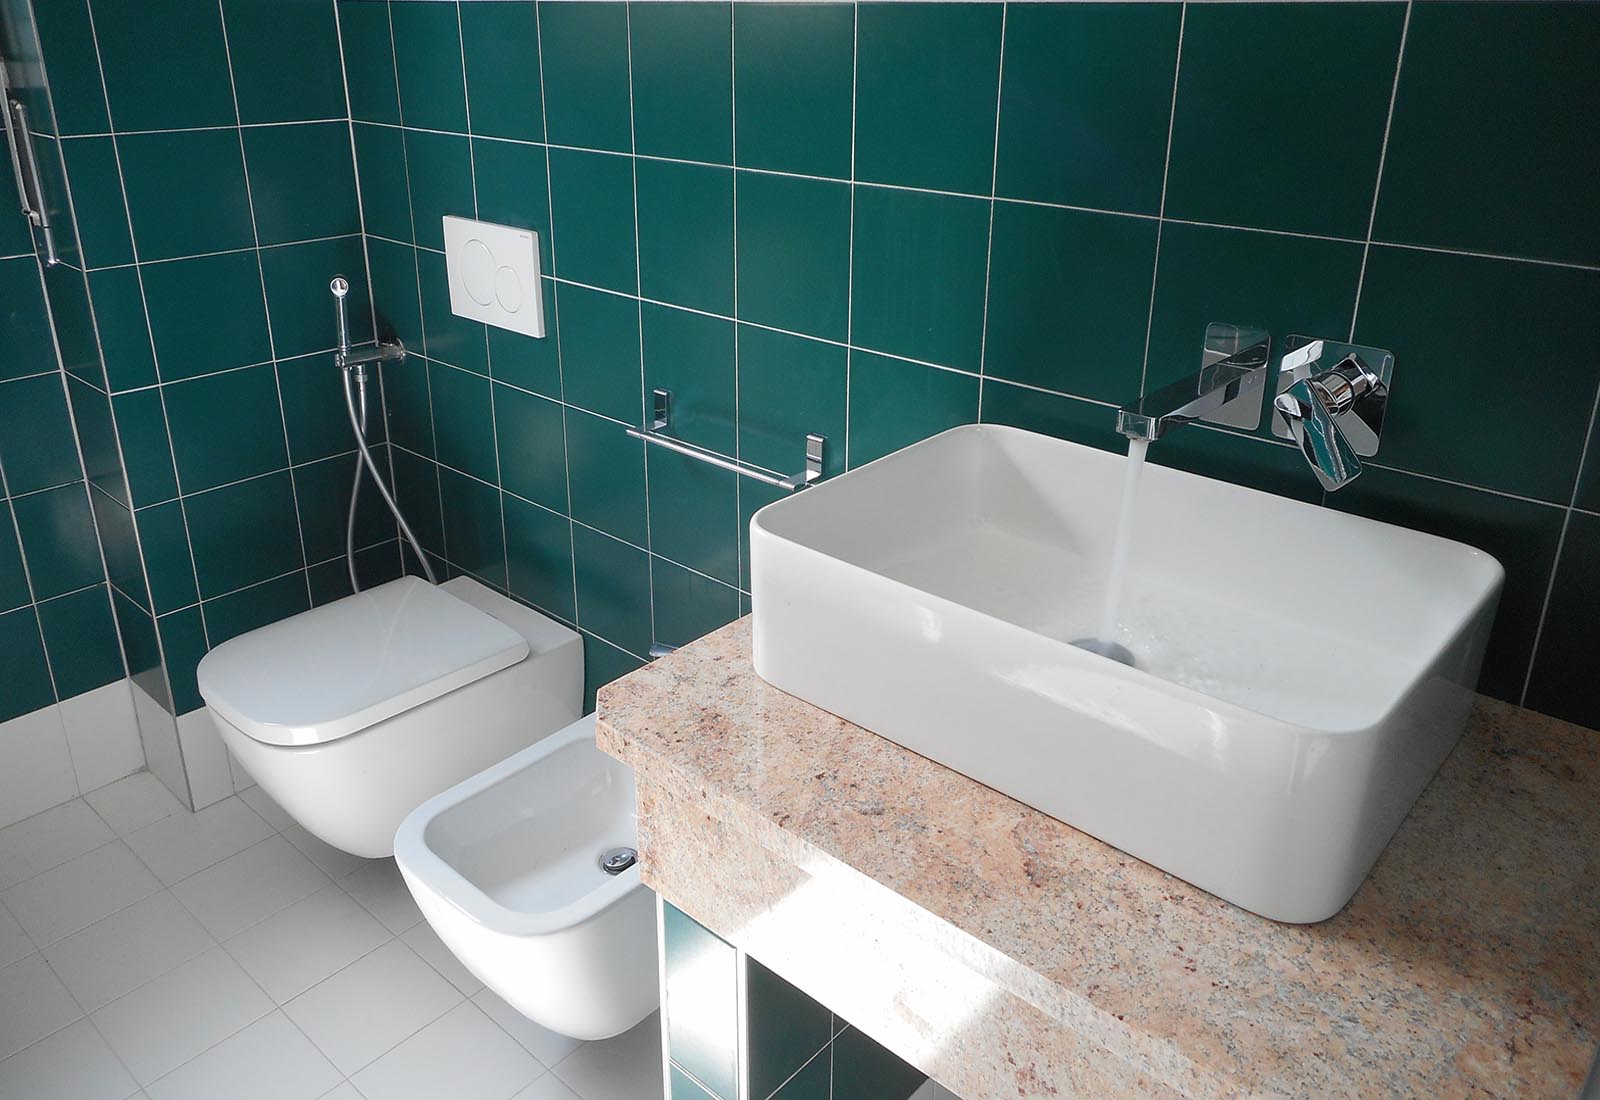 Apartment renovation in Rho - The bathroom